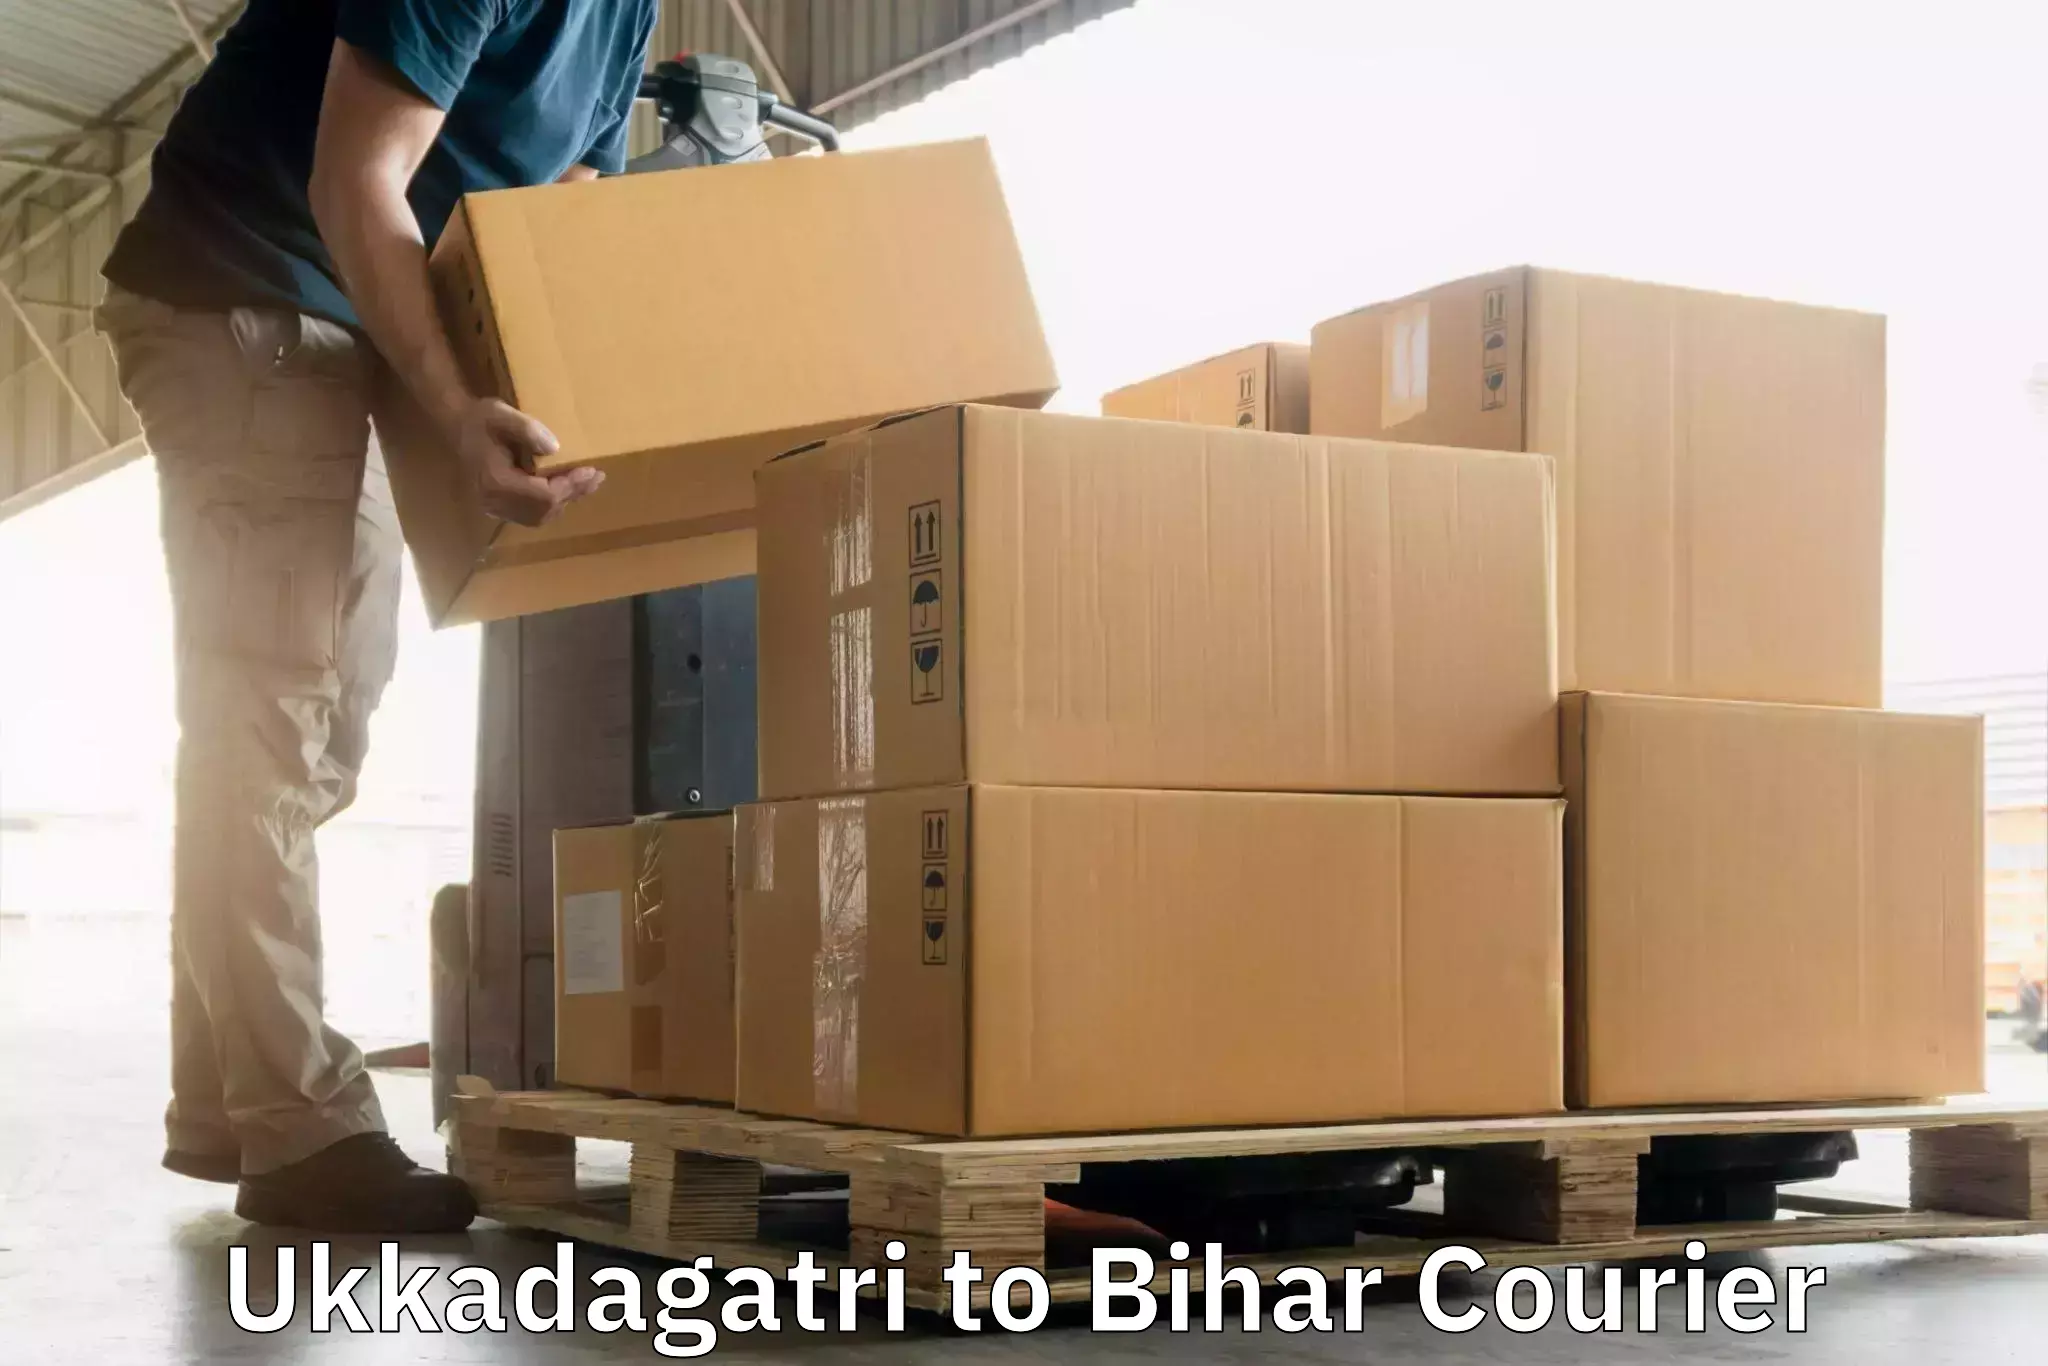 Courier service booking Ukkadagatri to Biraul